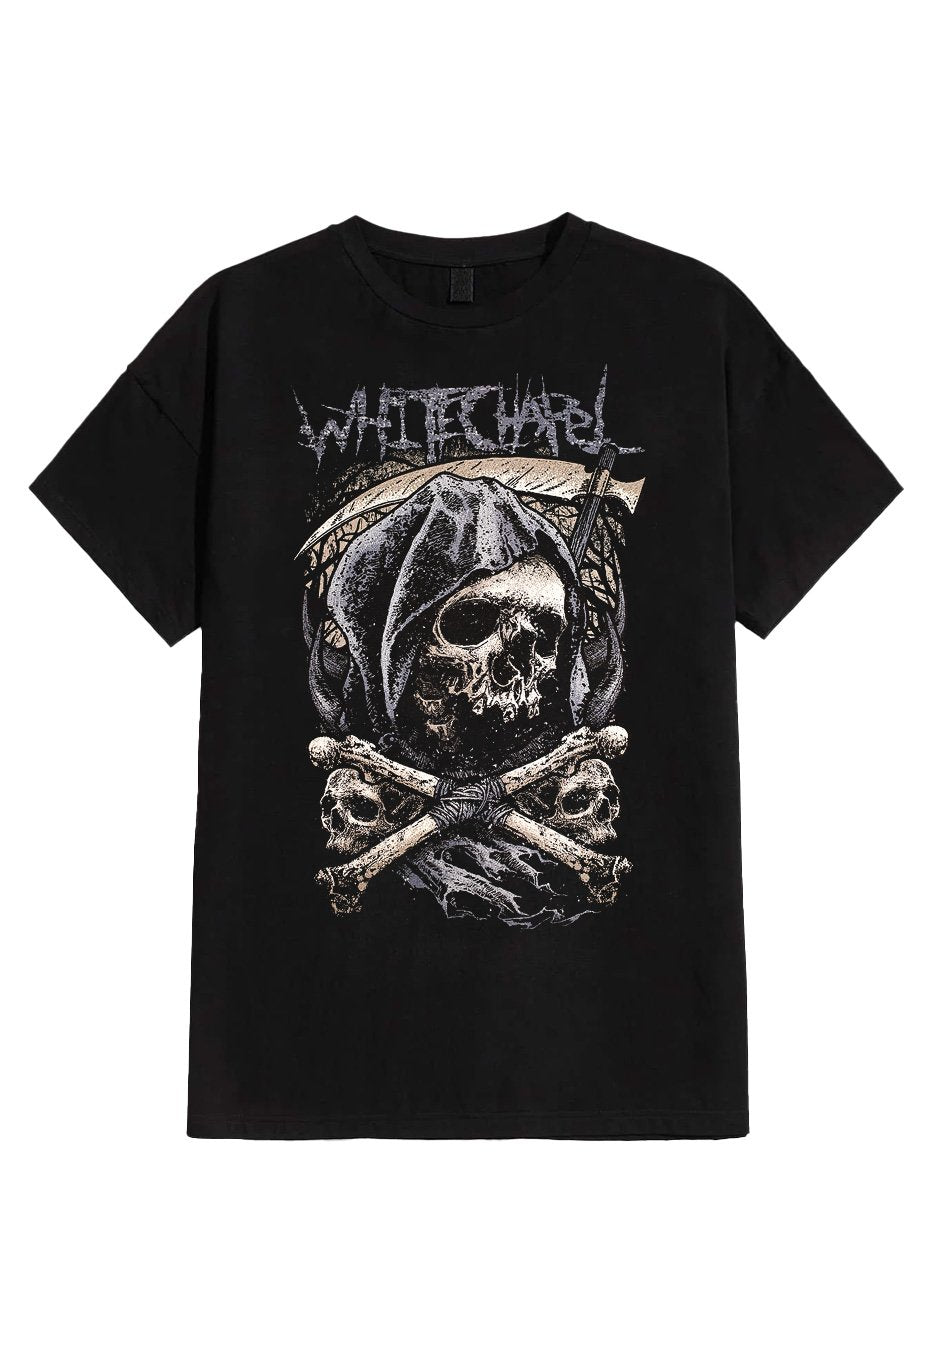 Whitechapel - Reaper Is Coming - T-Shirt